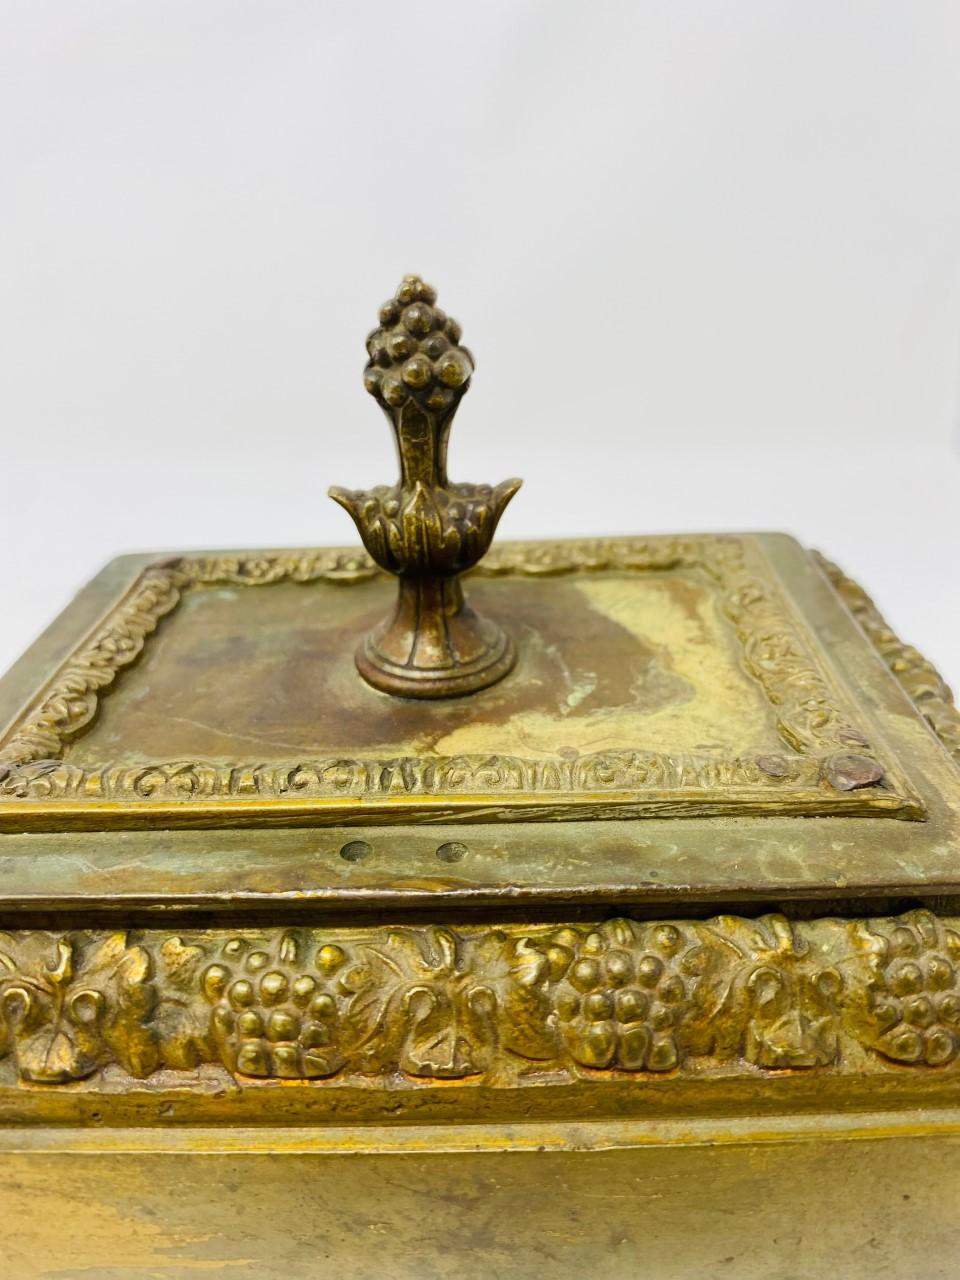 Cast Antique 1920s Sculptural Bronze Box with Finial Lid For Sale